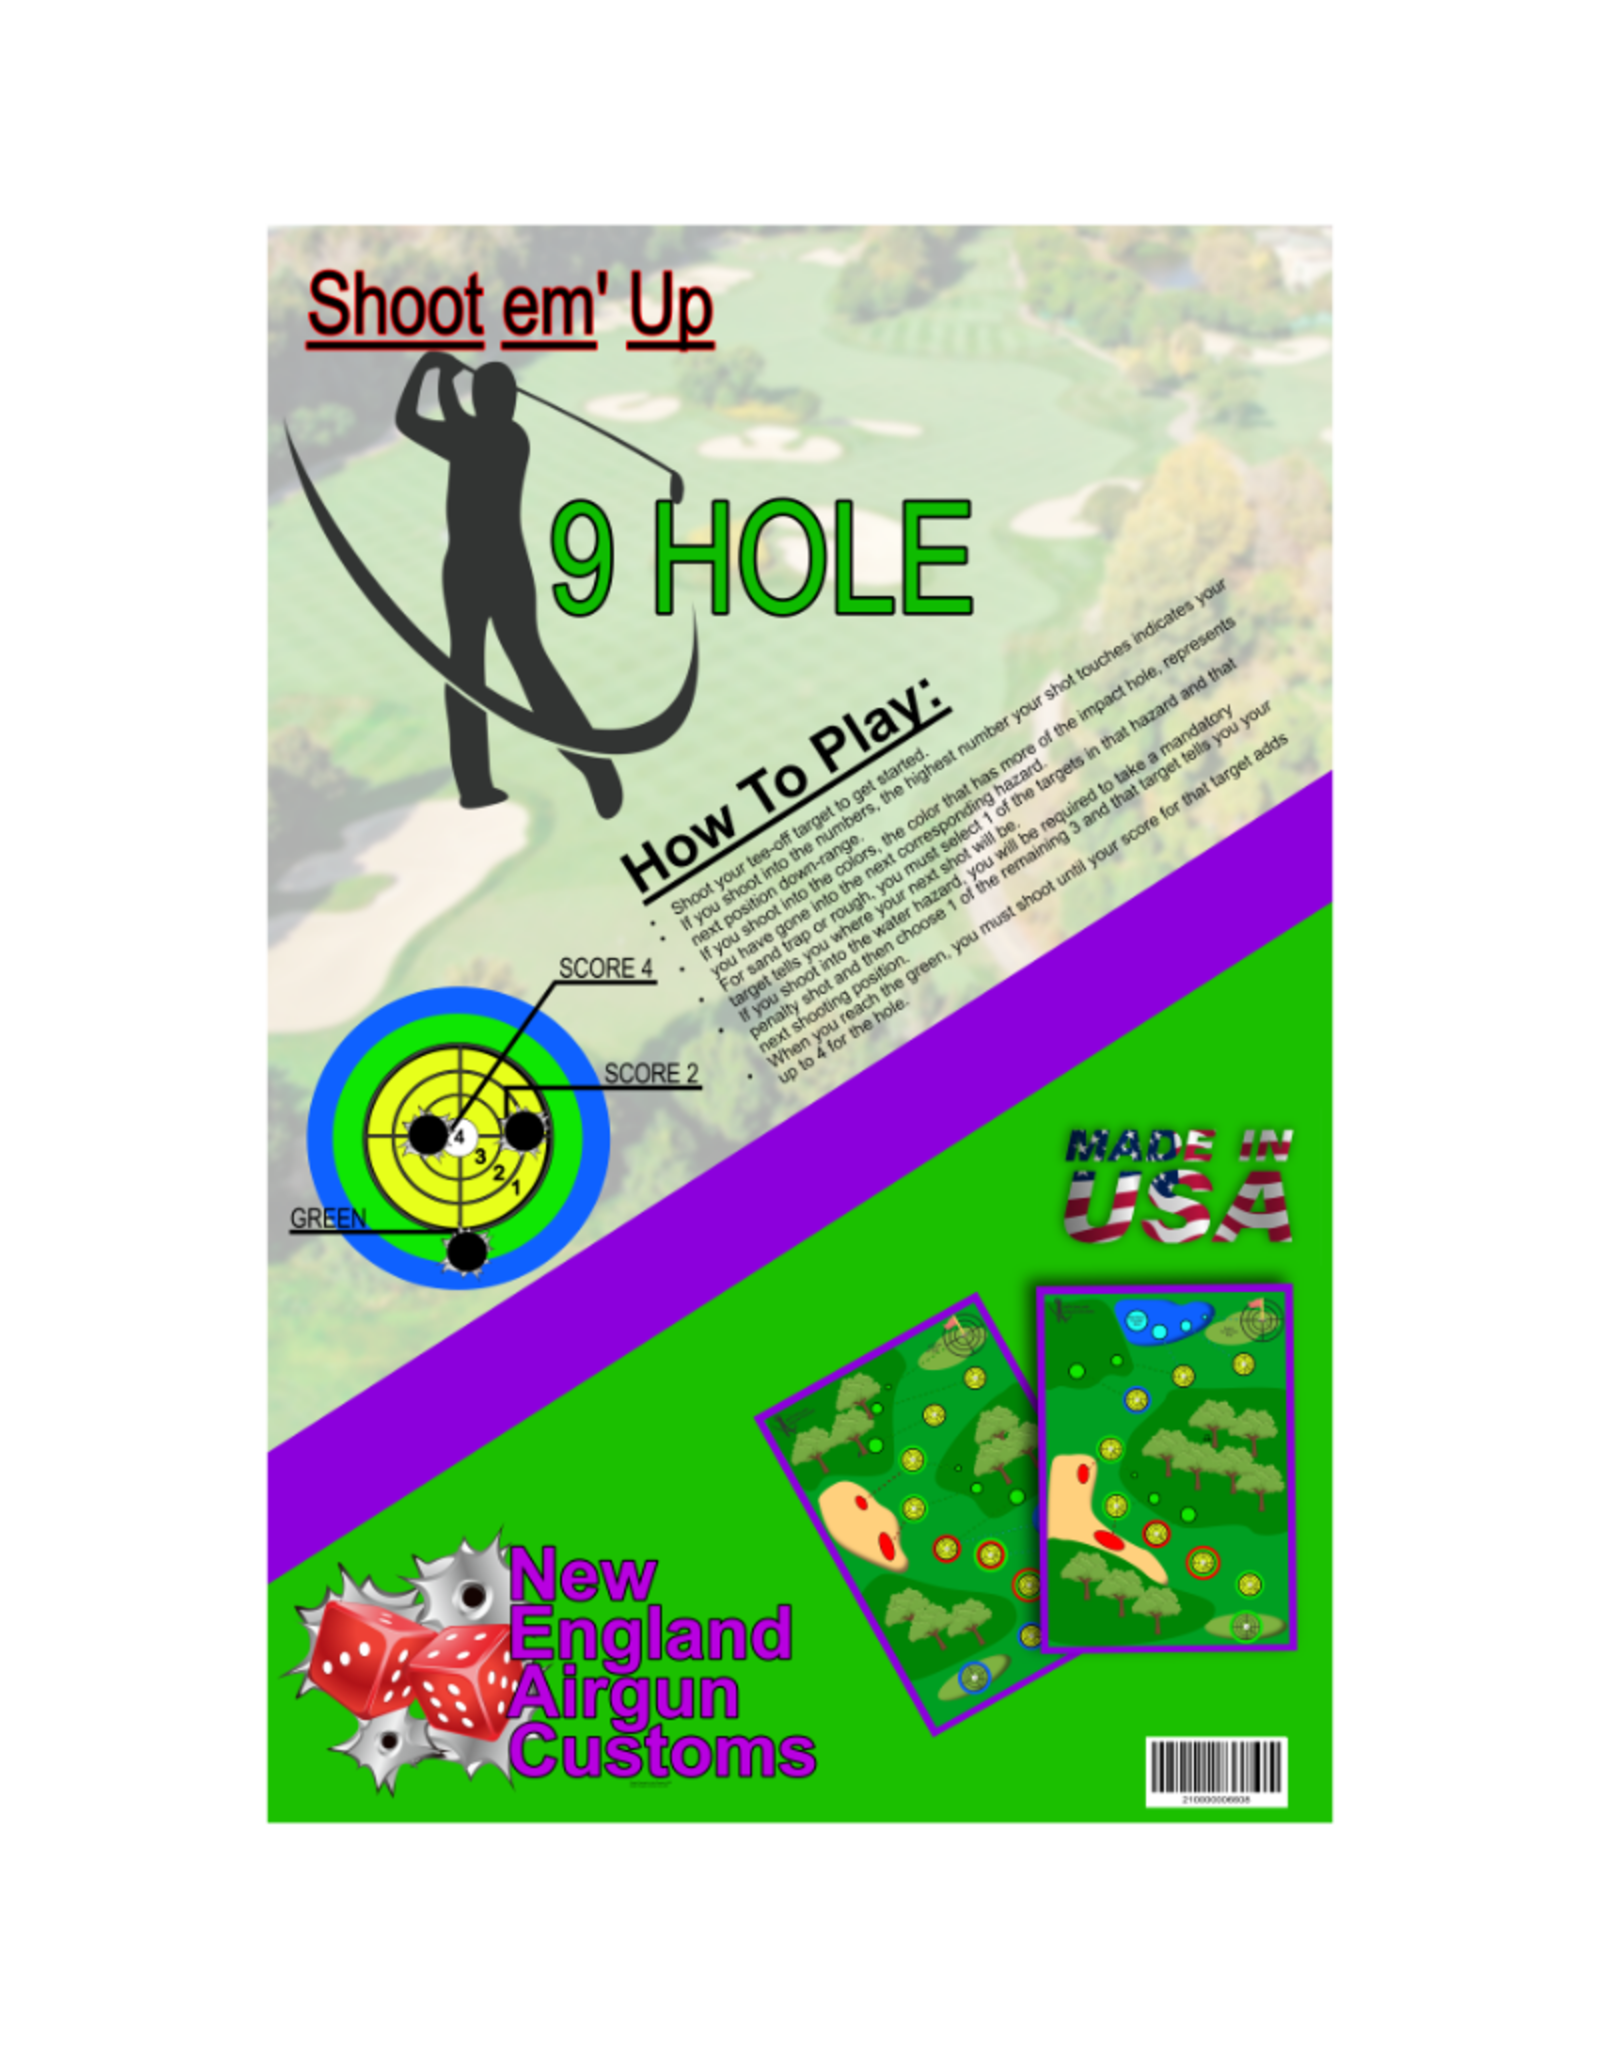 New England Airgun 50 Pack - 9 Hole Golf Target Pack | Shoot em’ Up | 9 targets per pack